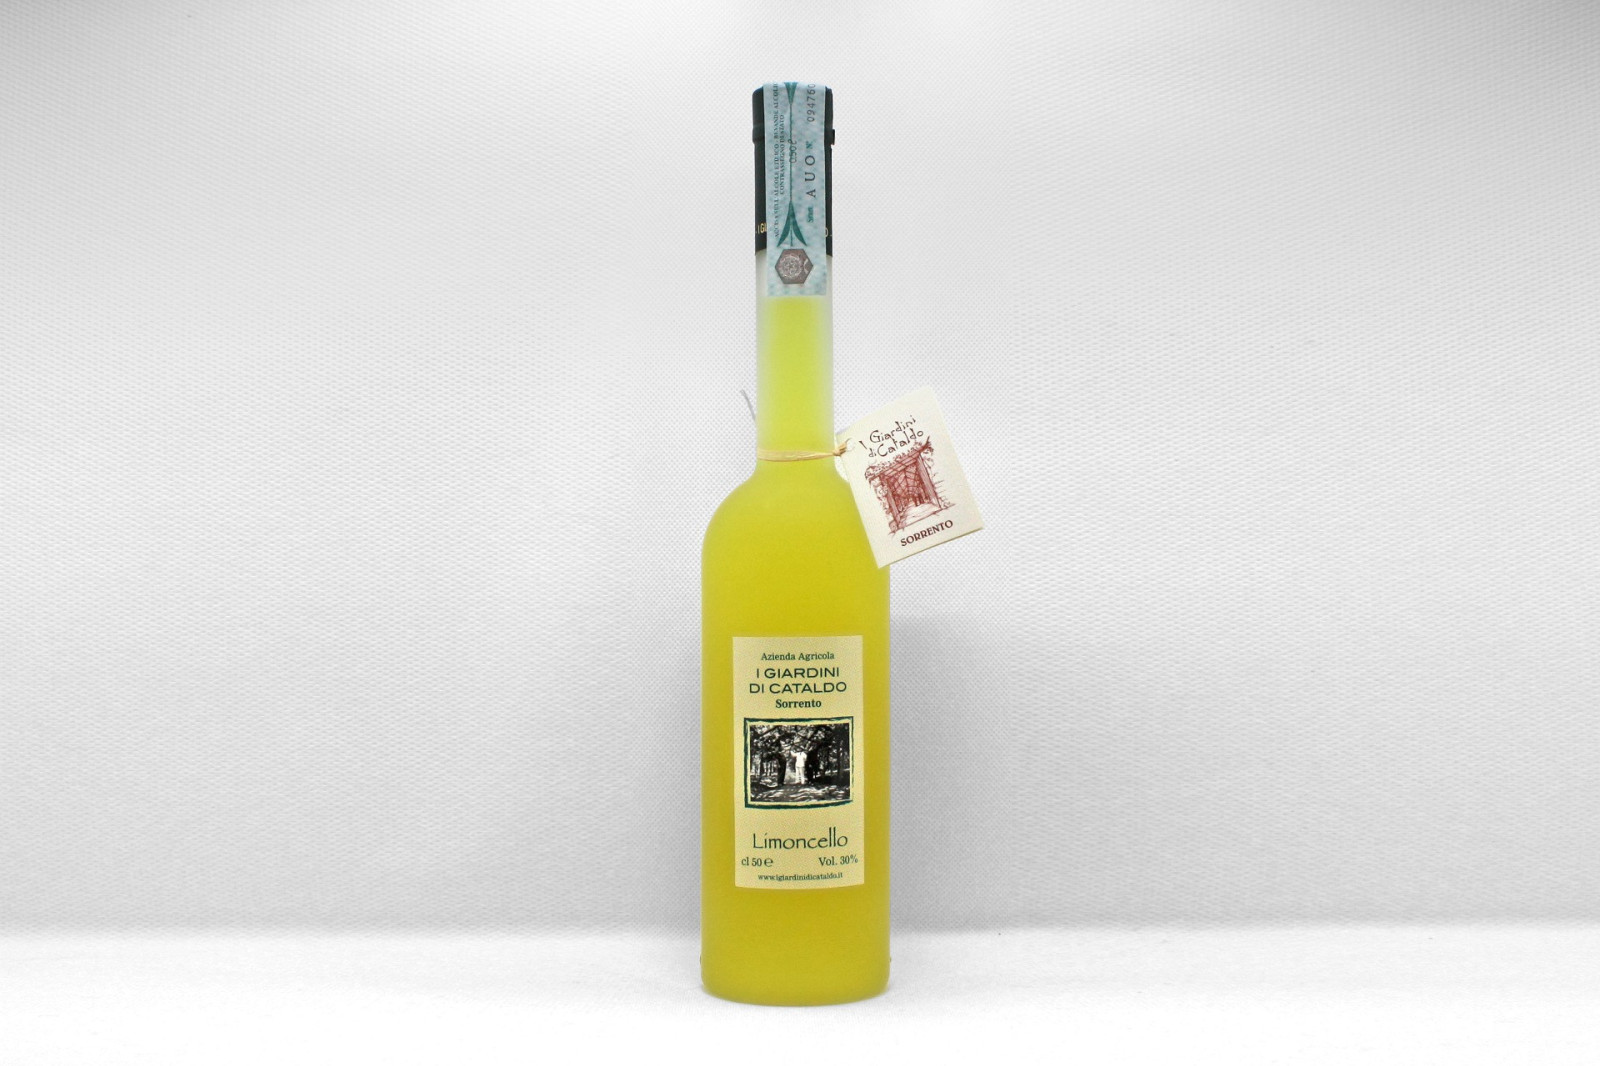 Sorrento IGP Limoncello in a 50 cl glass bottle - I Giardini Di Cataldo  Sorrento agricultural company